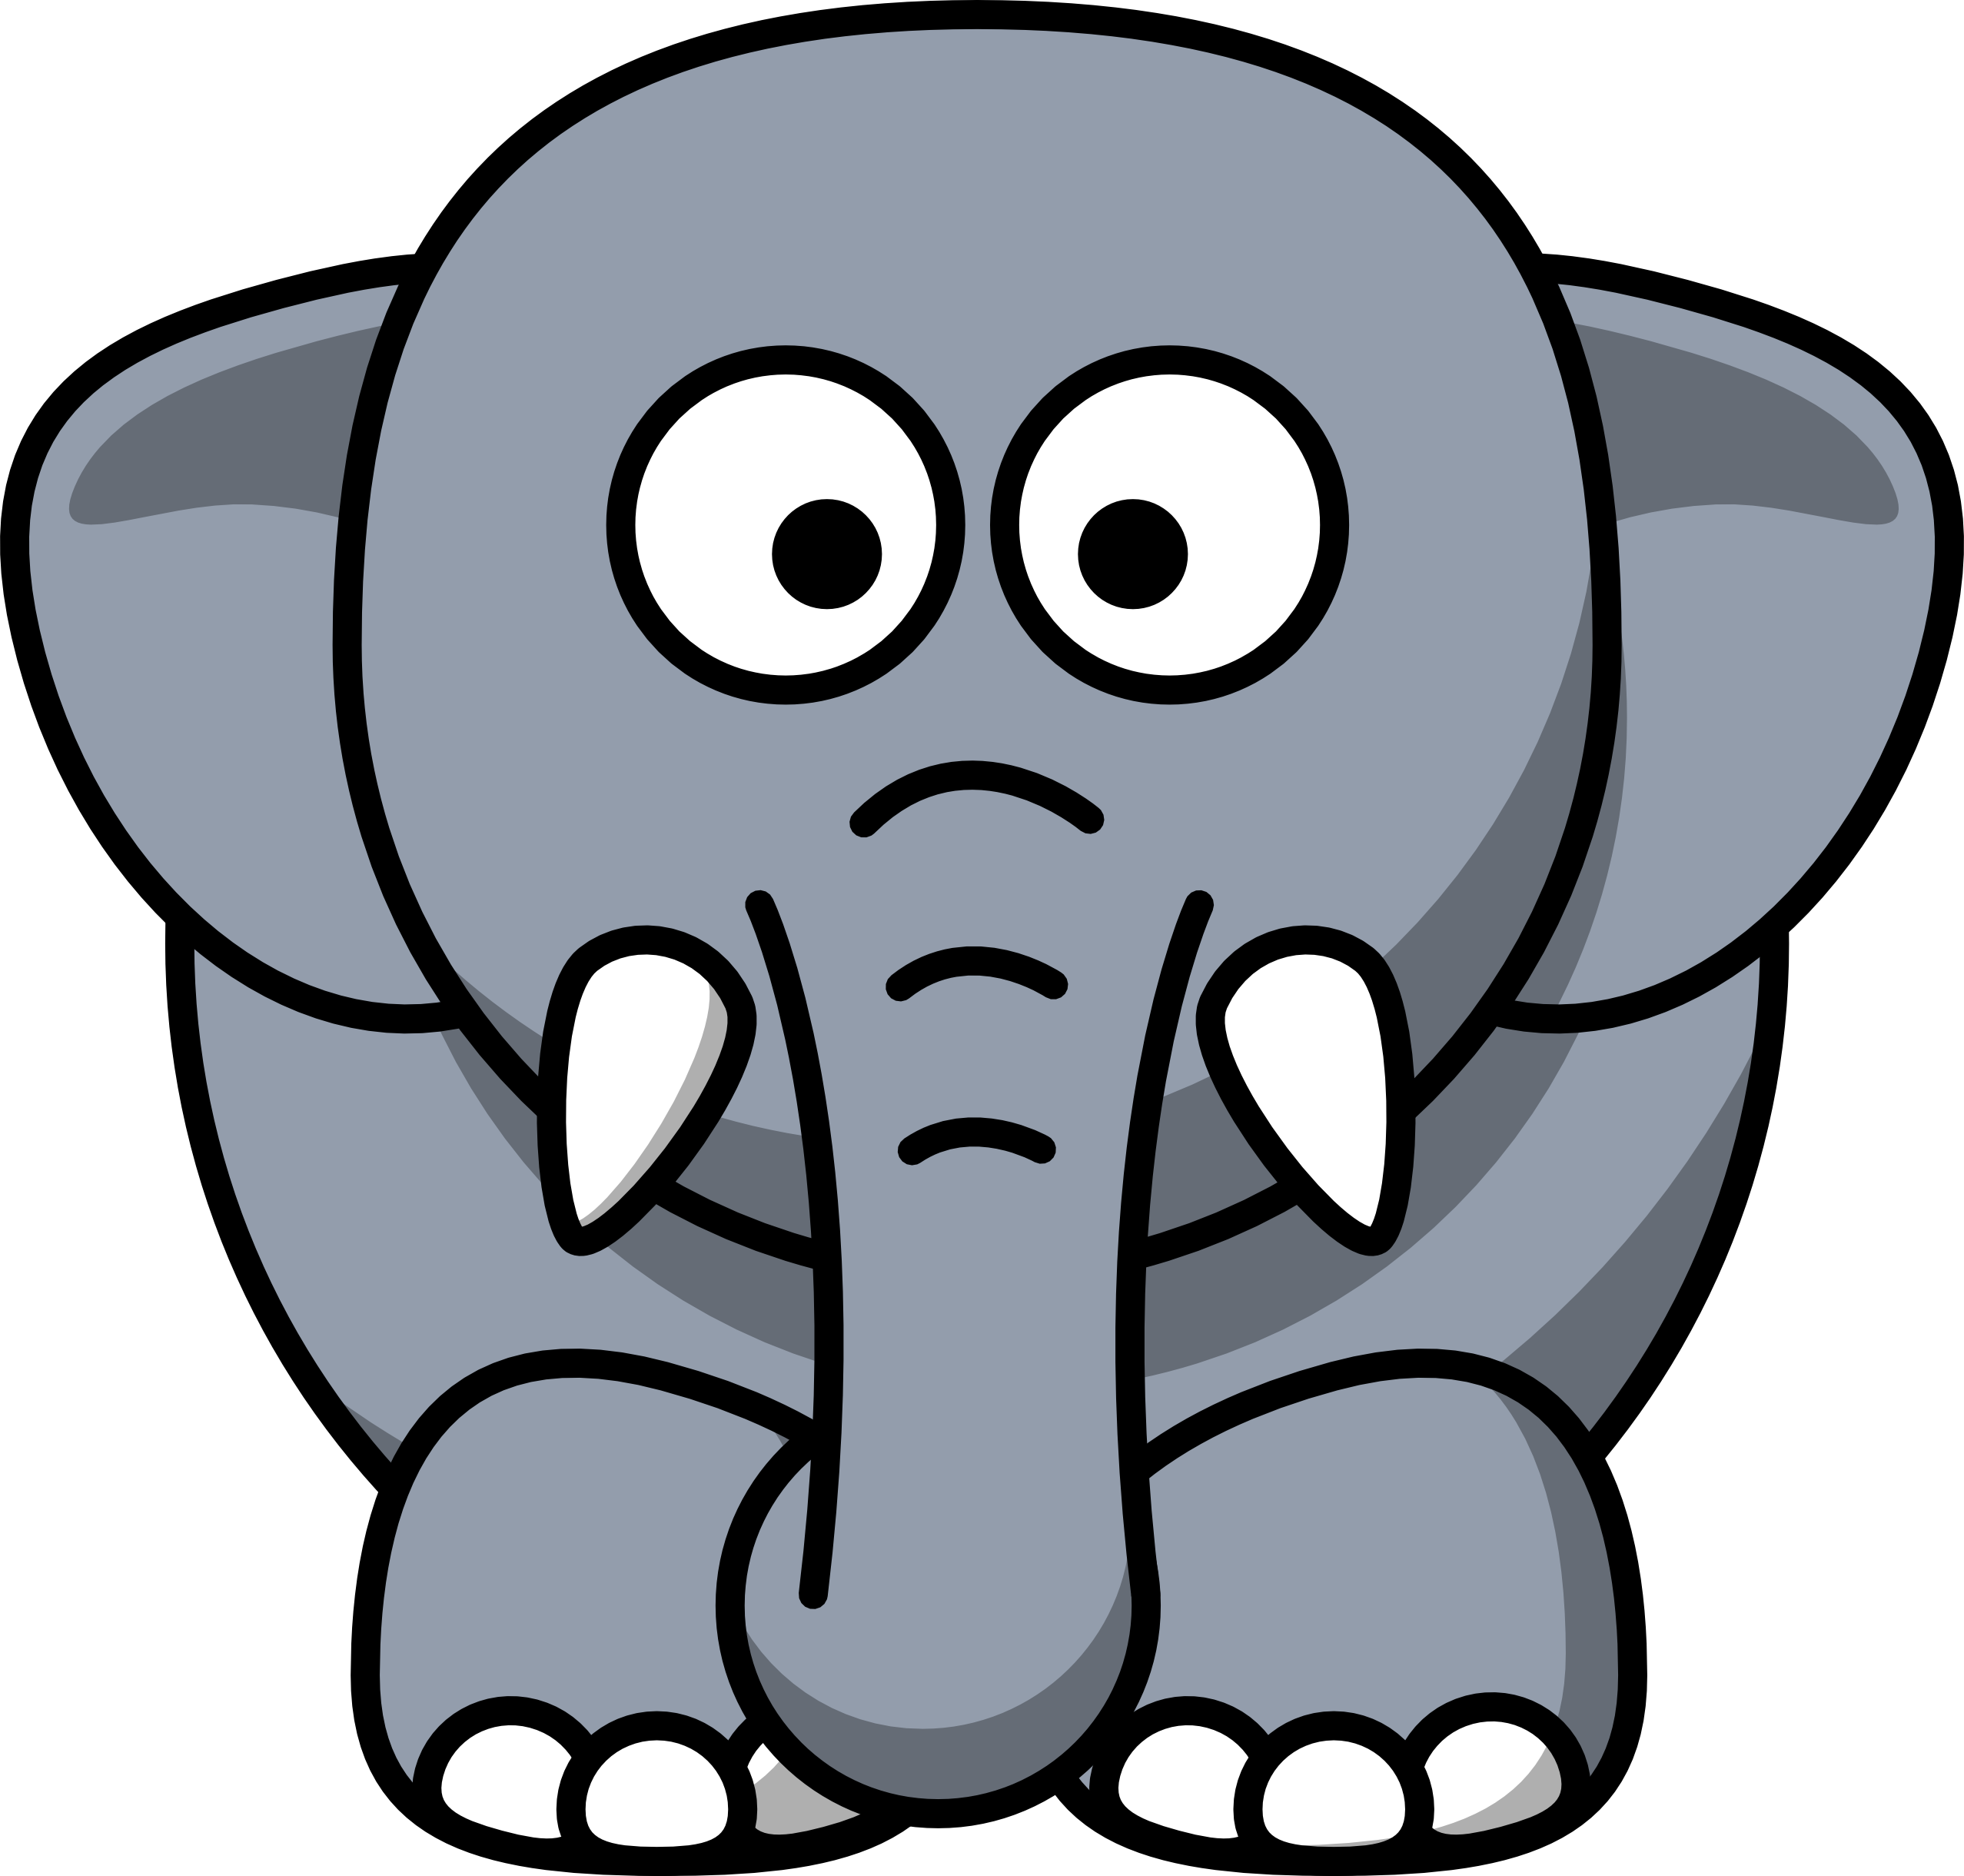 Elephant Cartoon Drawing - Clipart library